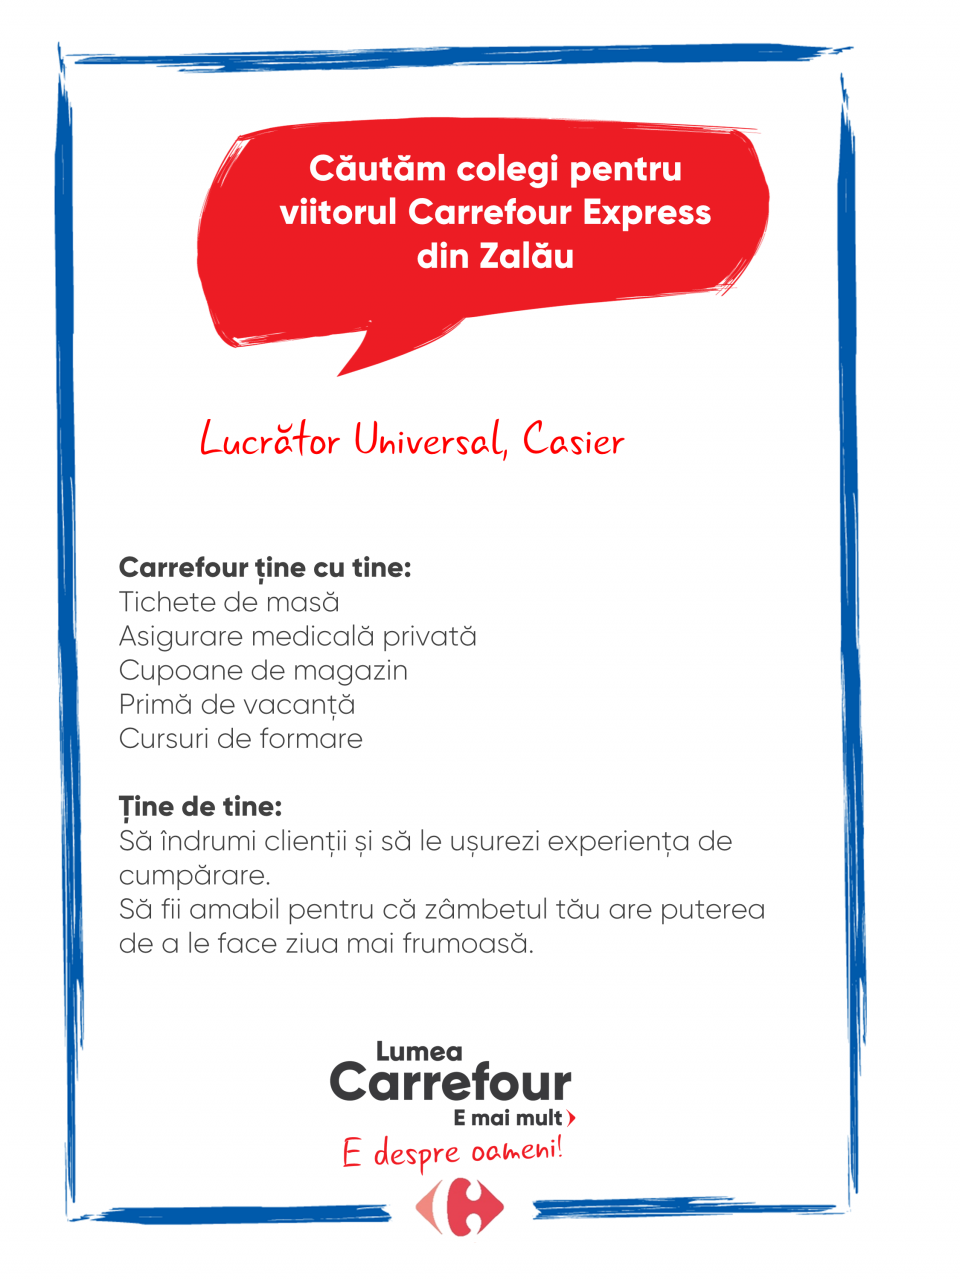 Casier si lucrator universal la Carrefour Express Zalau